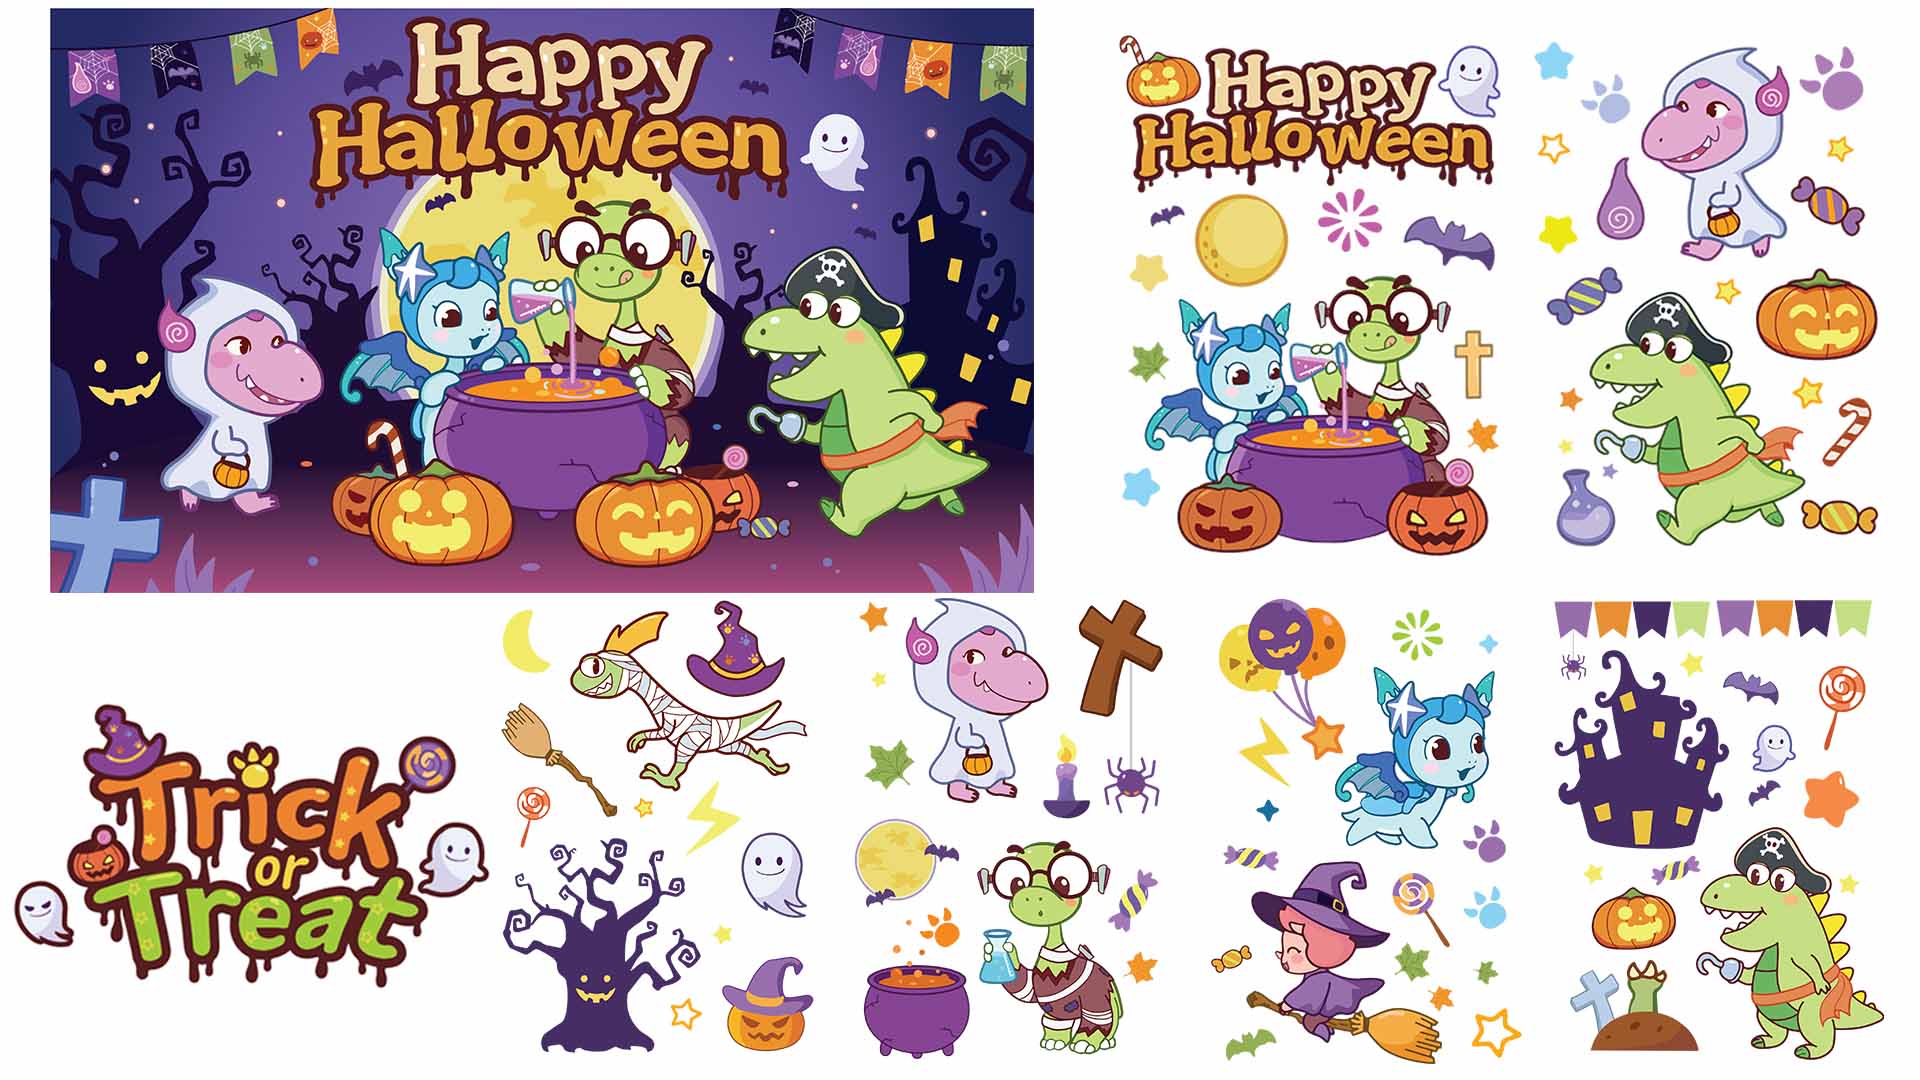 The Moyu Animation Company墨羽动画旗下动画片三只小恐龙Three Little Dinosaurs剧照 The Moyu Animation Company Three Little Dinosaurs sticker design- Halloween theme